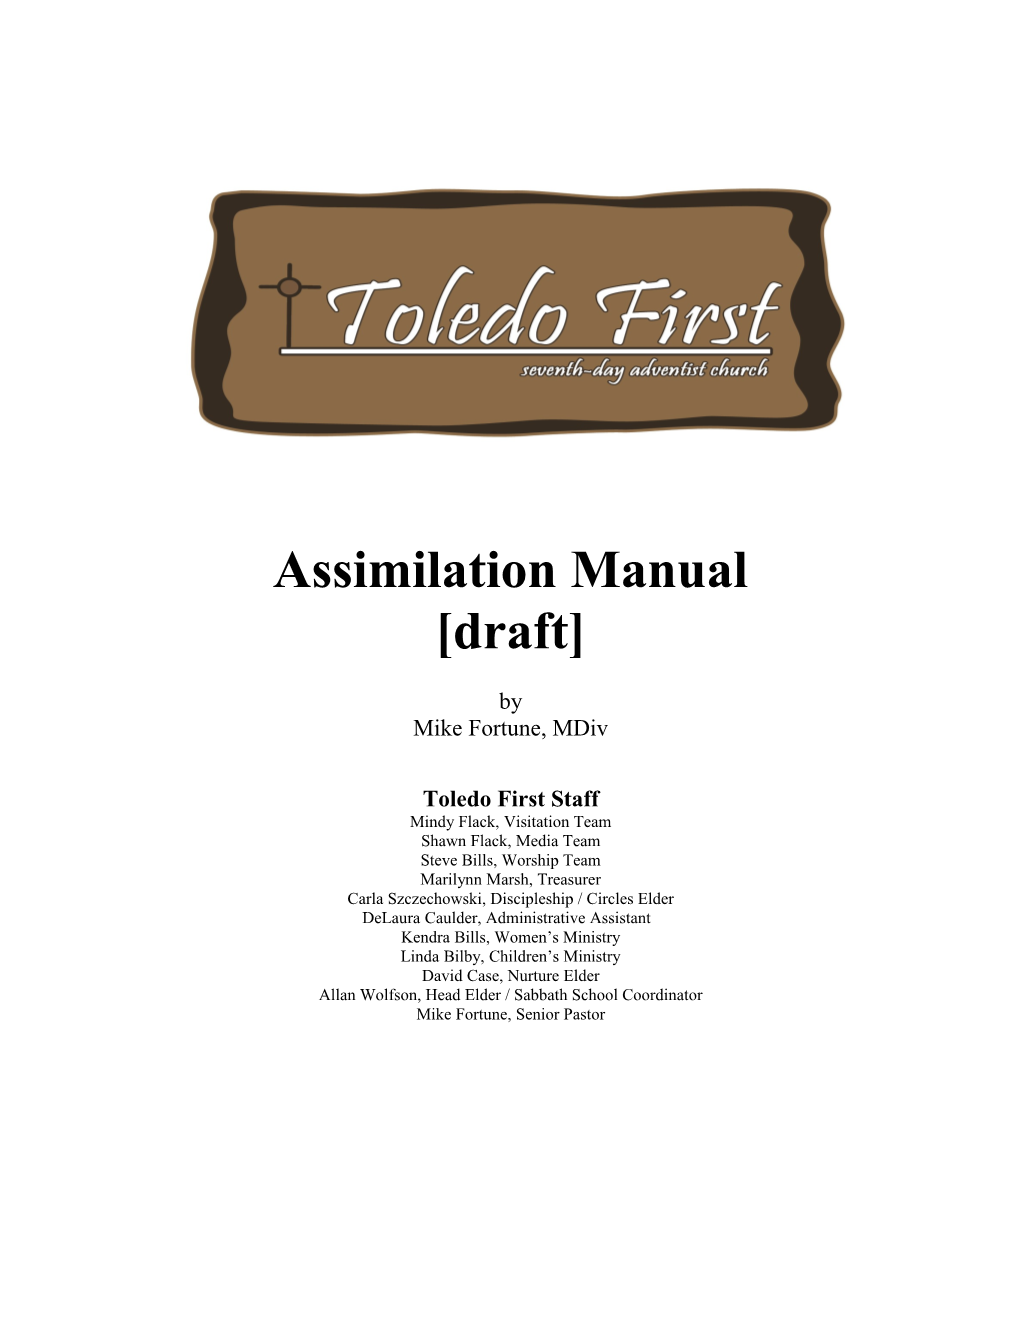 Assimilation Manual